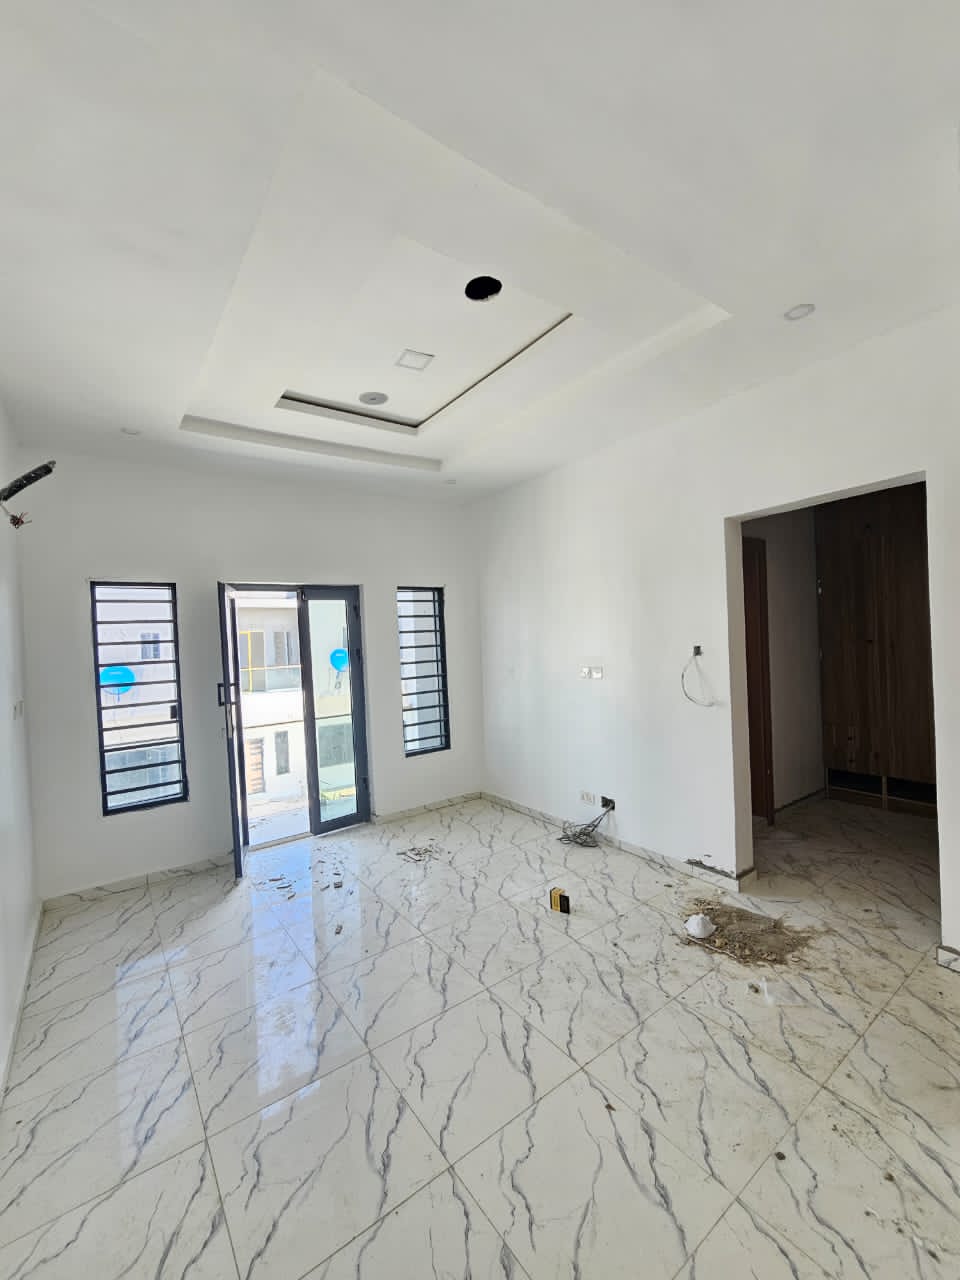 3bedrooms, Terrace Duplex, Ologolo, Lekki, Lagos State